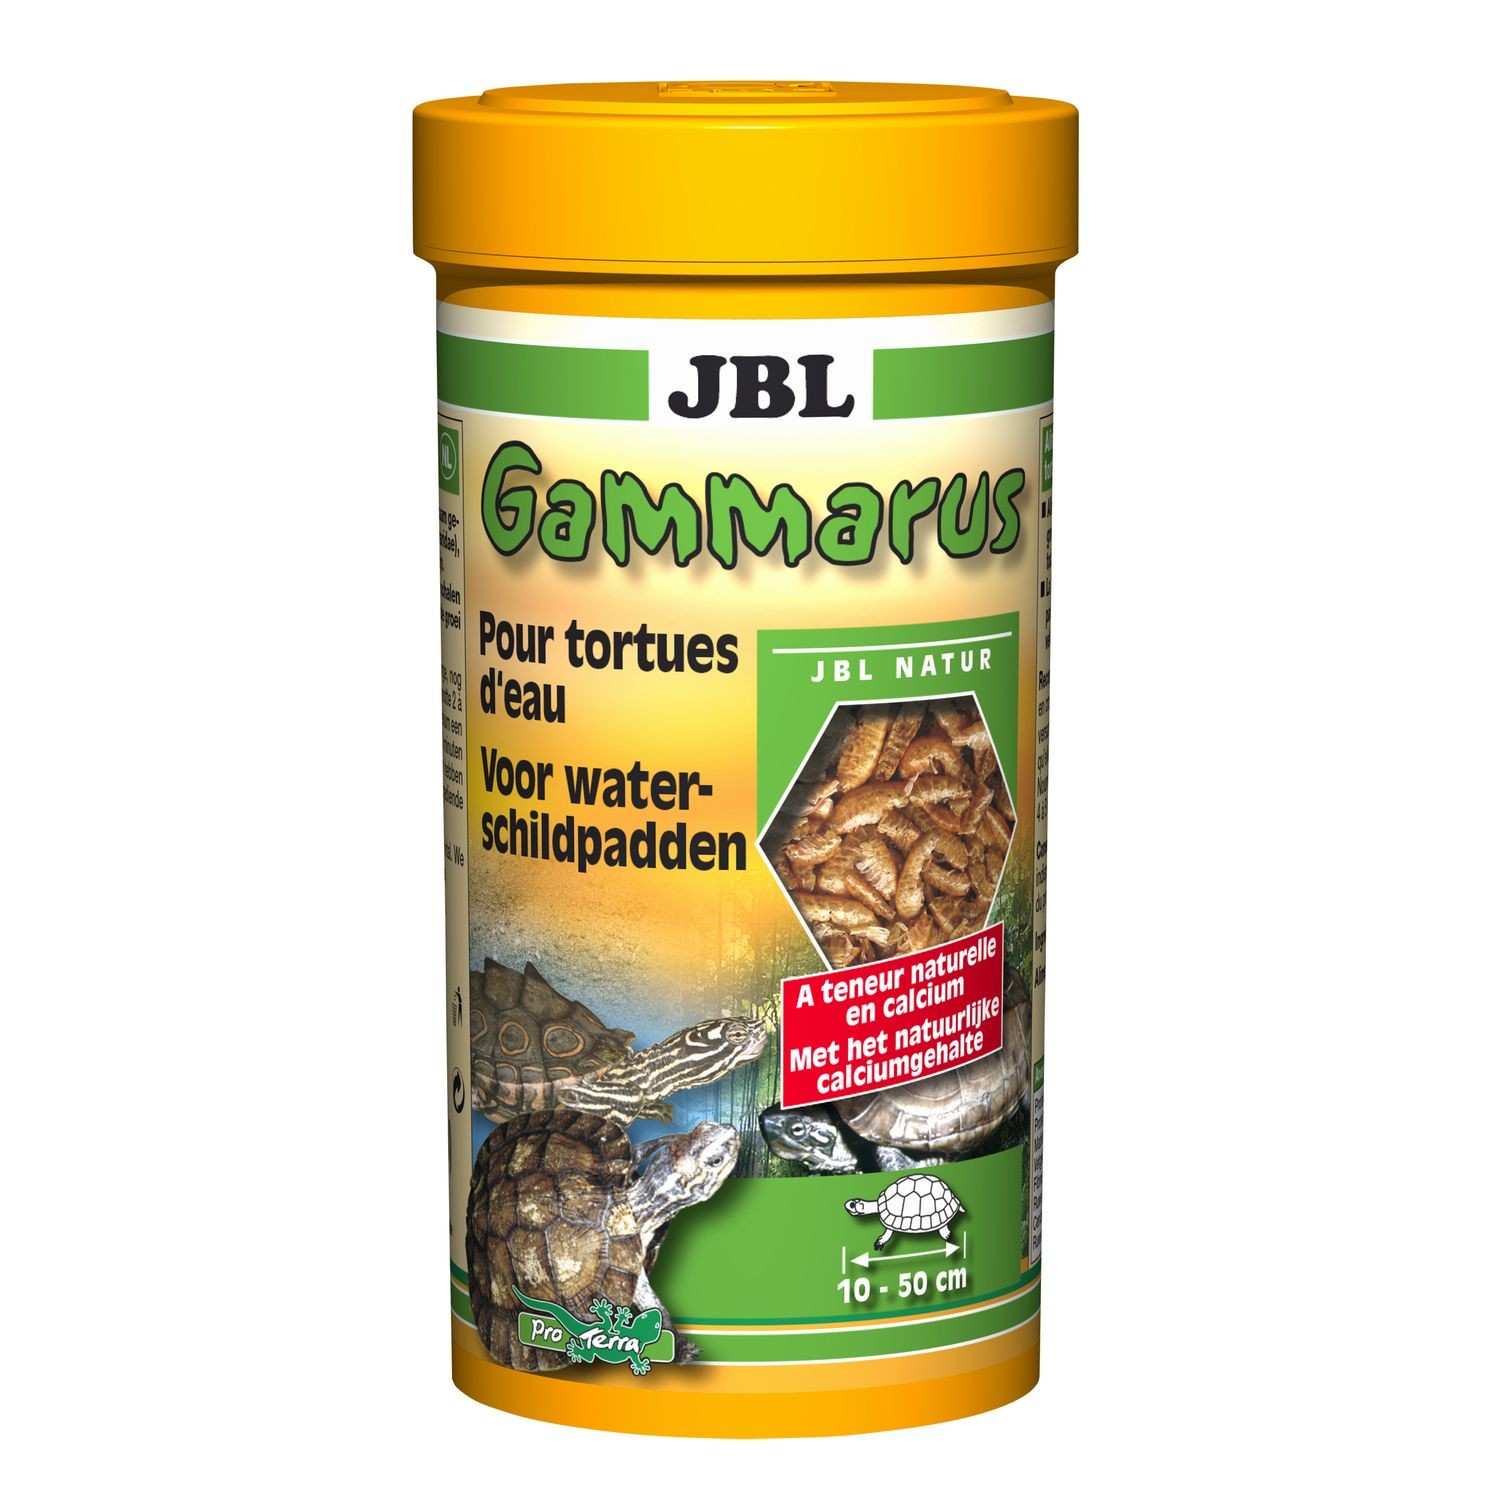 JBL Gammarus suplemento de qualidade superior para tartarugas de água